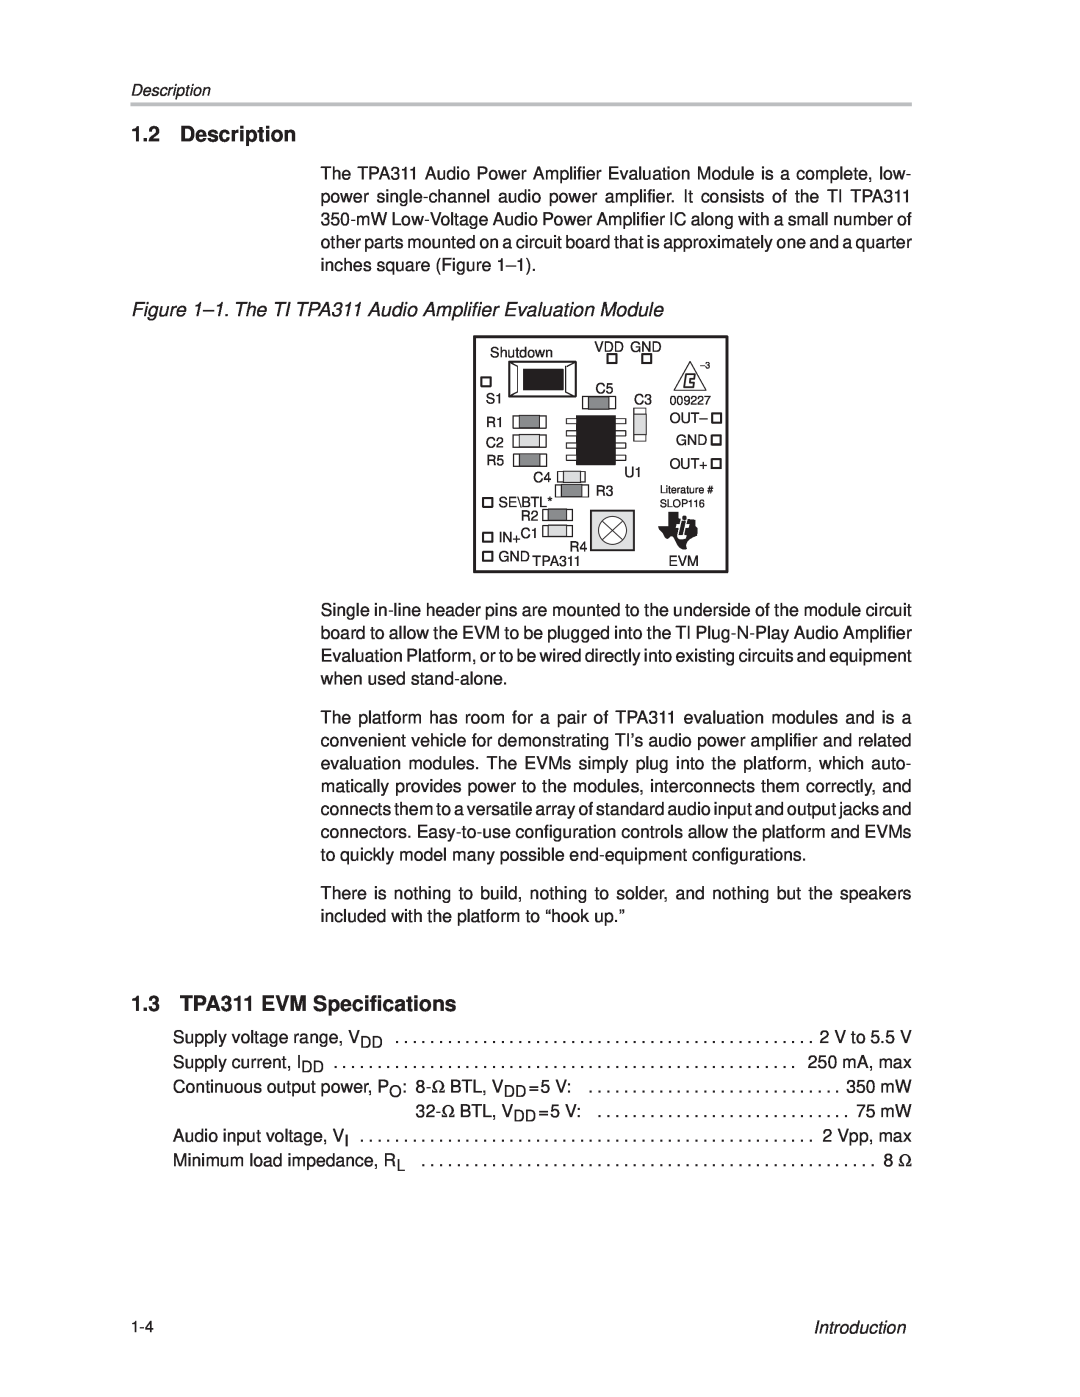 Texas Instruments TPA 311 Description, 1.3 TPA311 EVM Specifications, ±1. The TI TPA311 Audio Amplifier Evaluation Module 